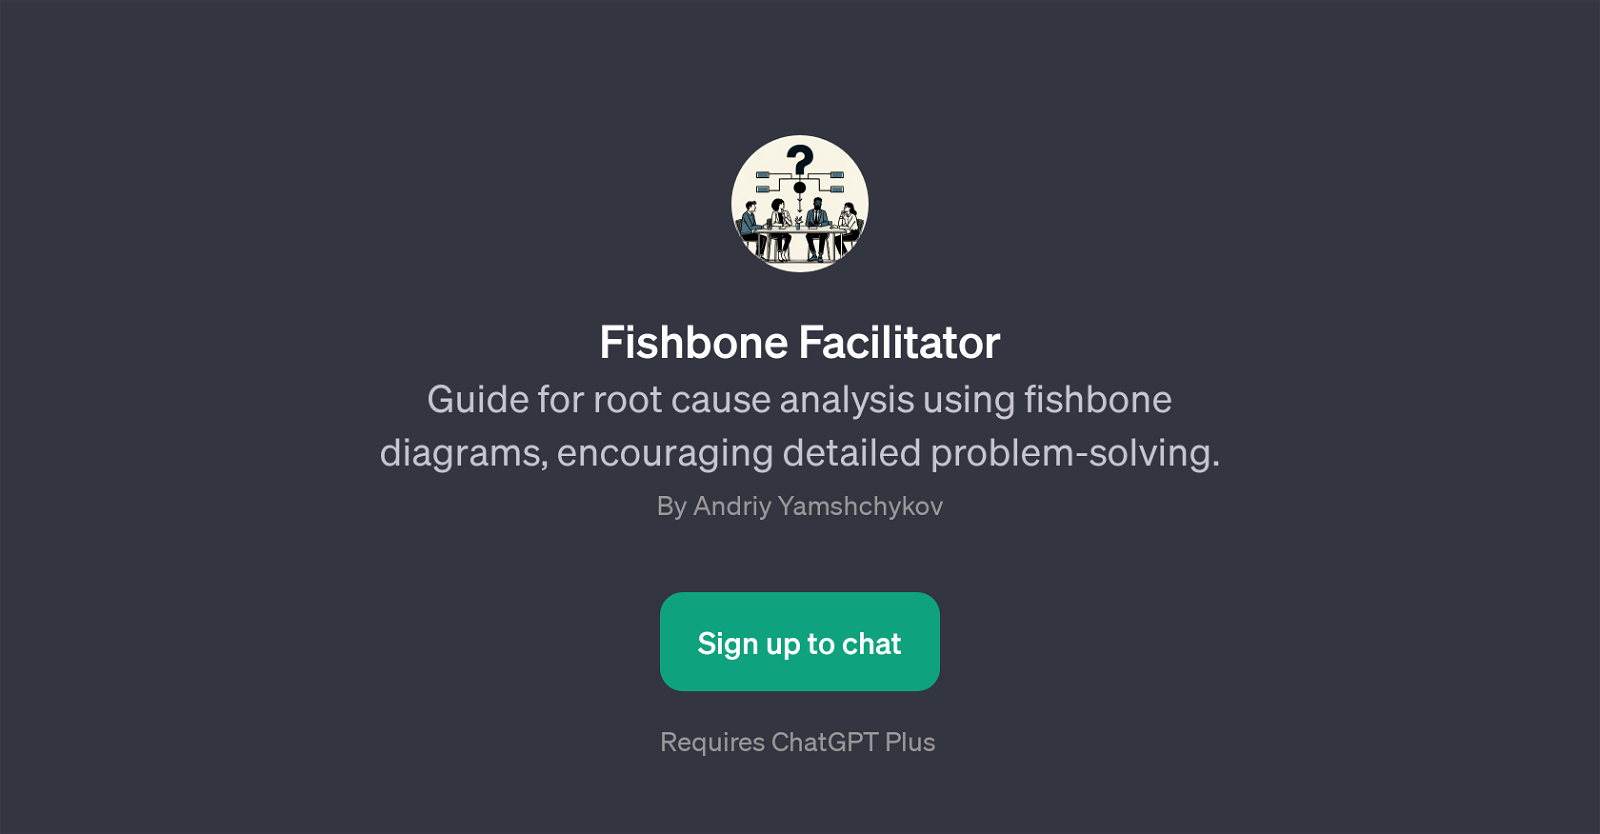 Fishbone Facilitator website